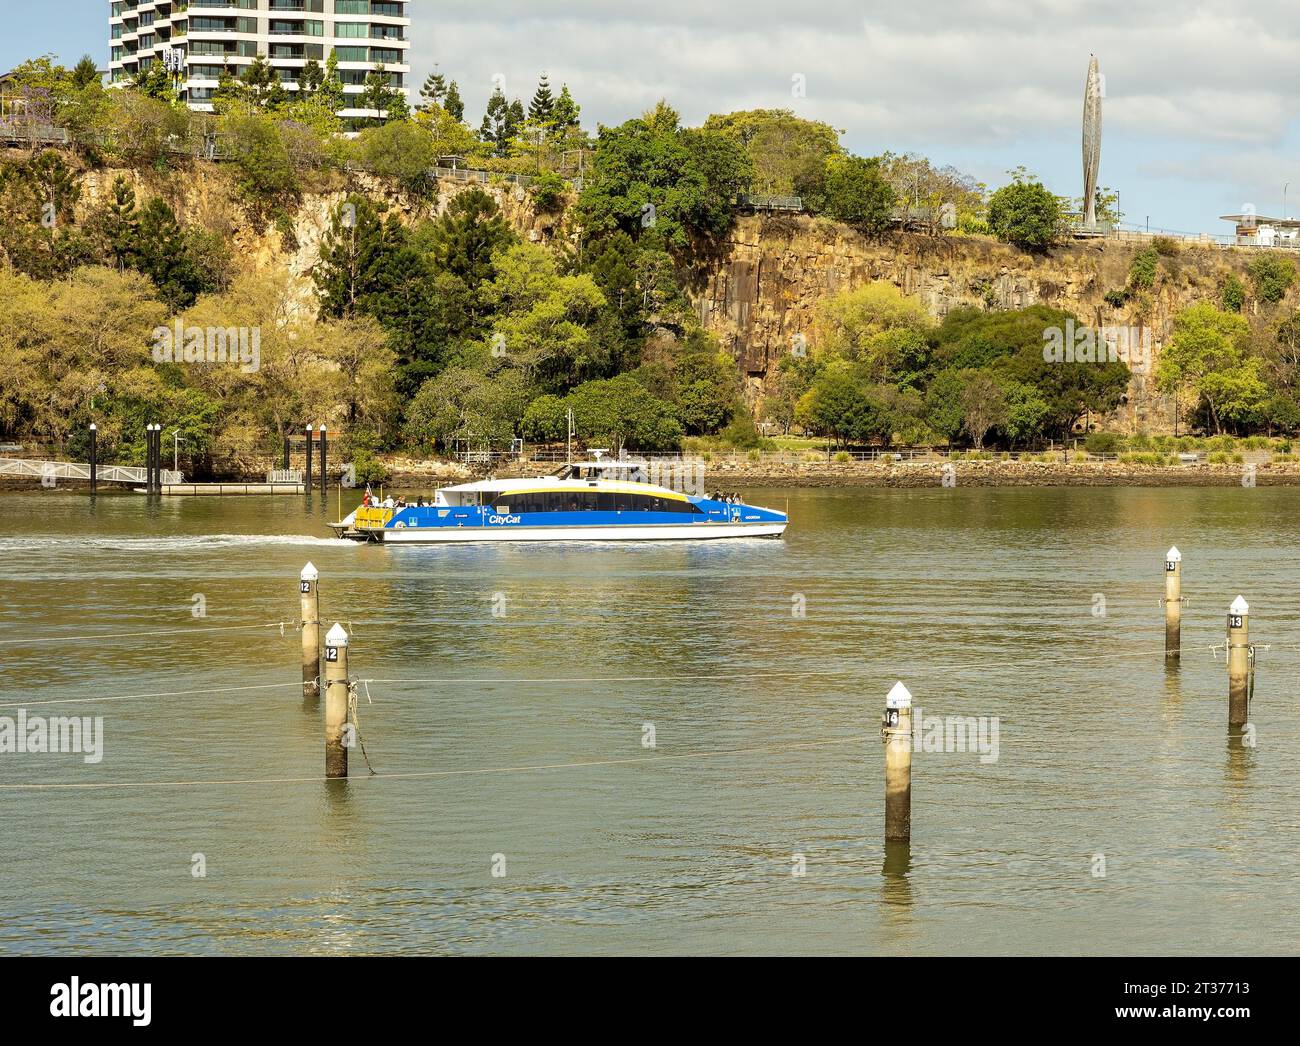 Citycat Ferries is public transport to get around Brisbane, Australia Stock Photo